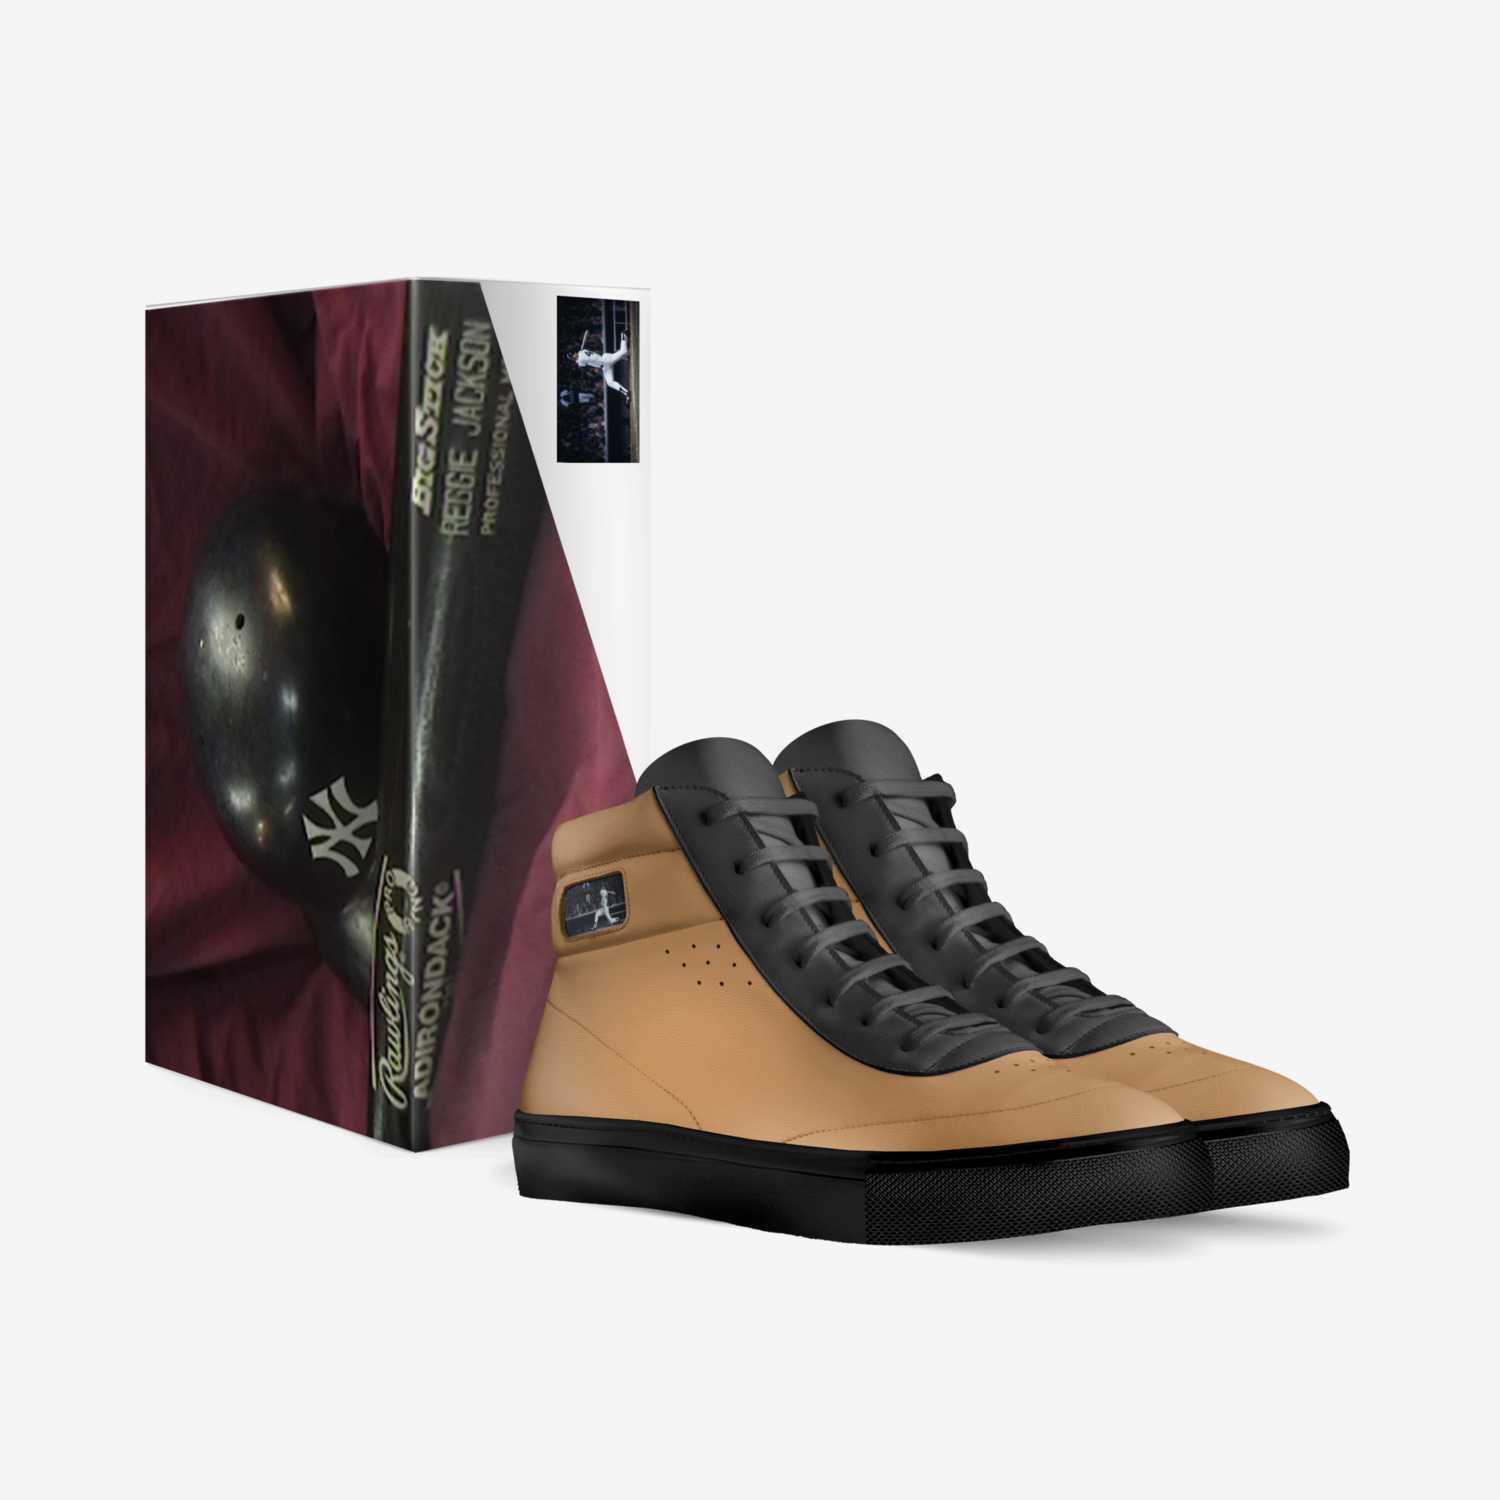 Mr. October  custom made in Italy shoes by Ml Harris Kixon Kixoff | Box view